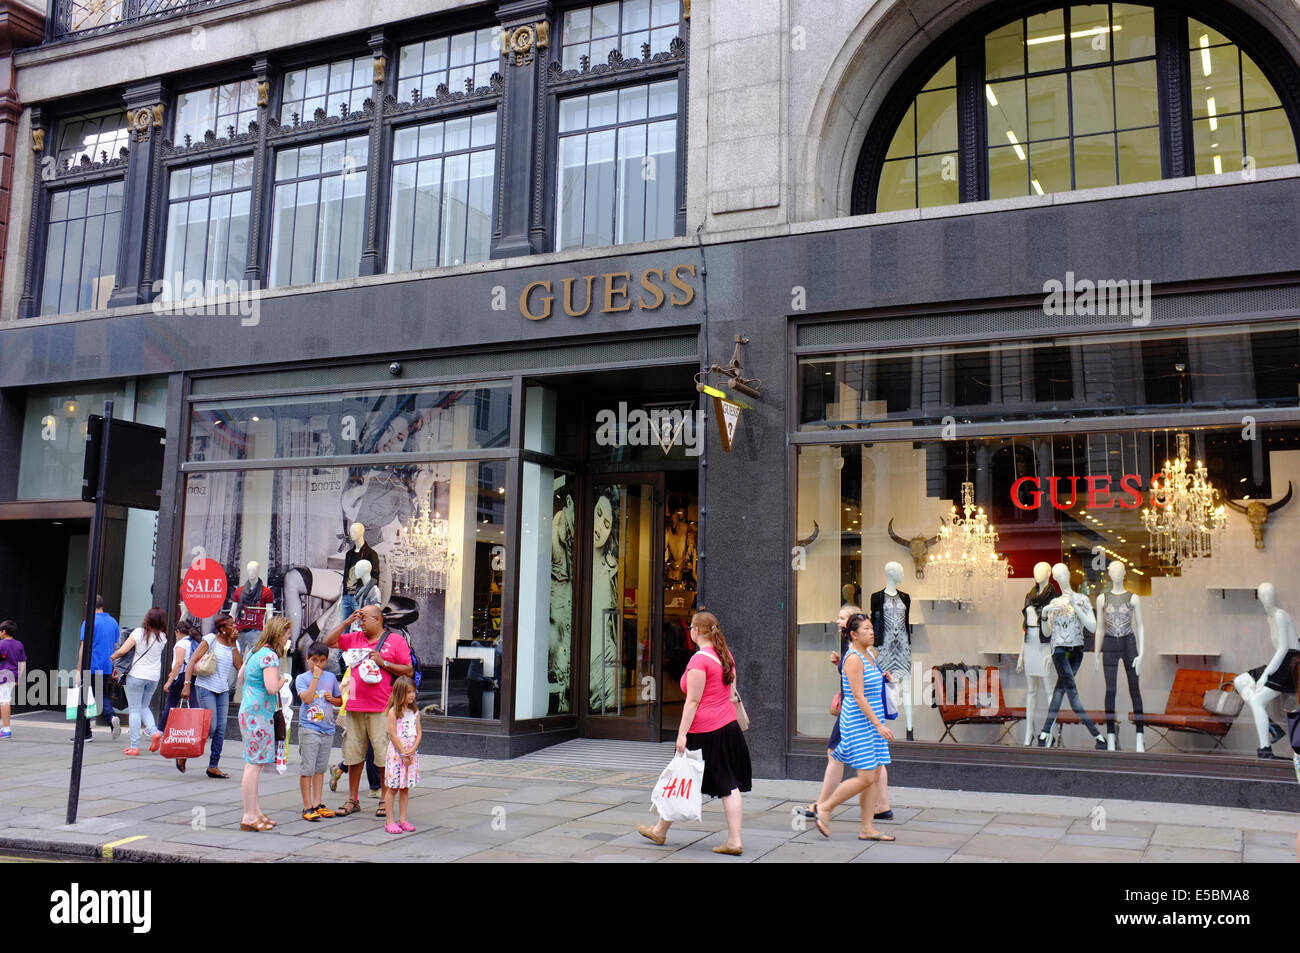 GUESS fashion store on Regent Street, London Stock Photo - Alamy